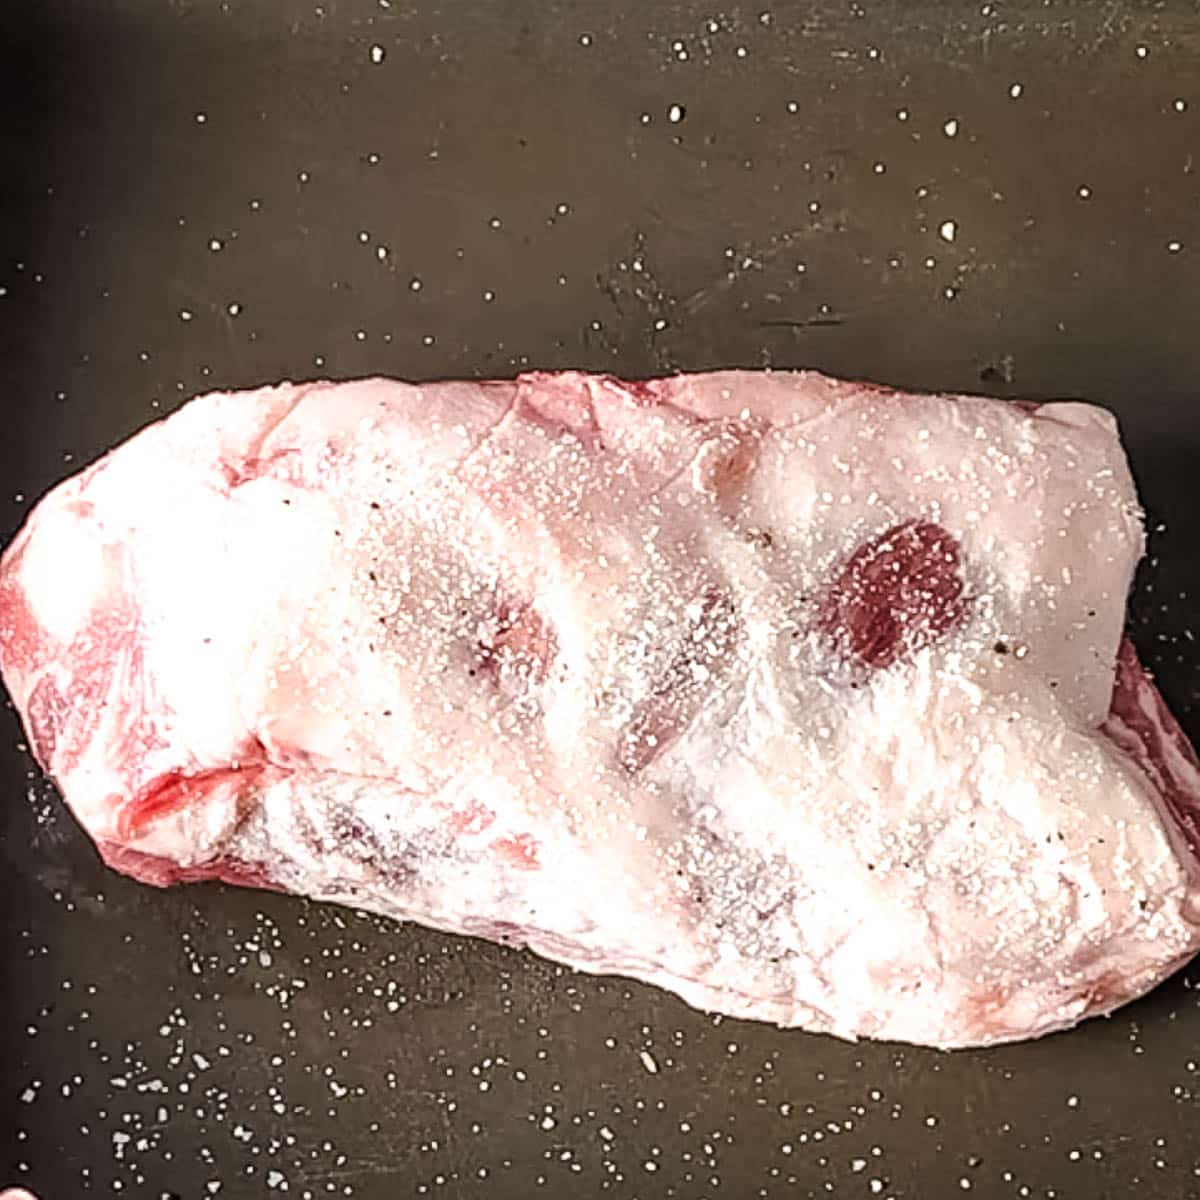 lamb breast seasoned with salt and pepper.